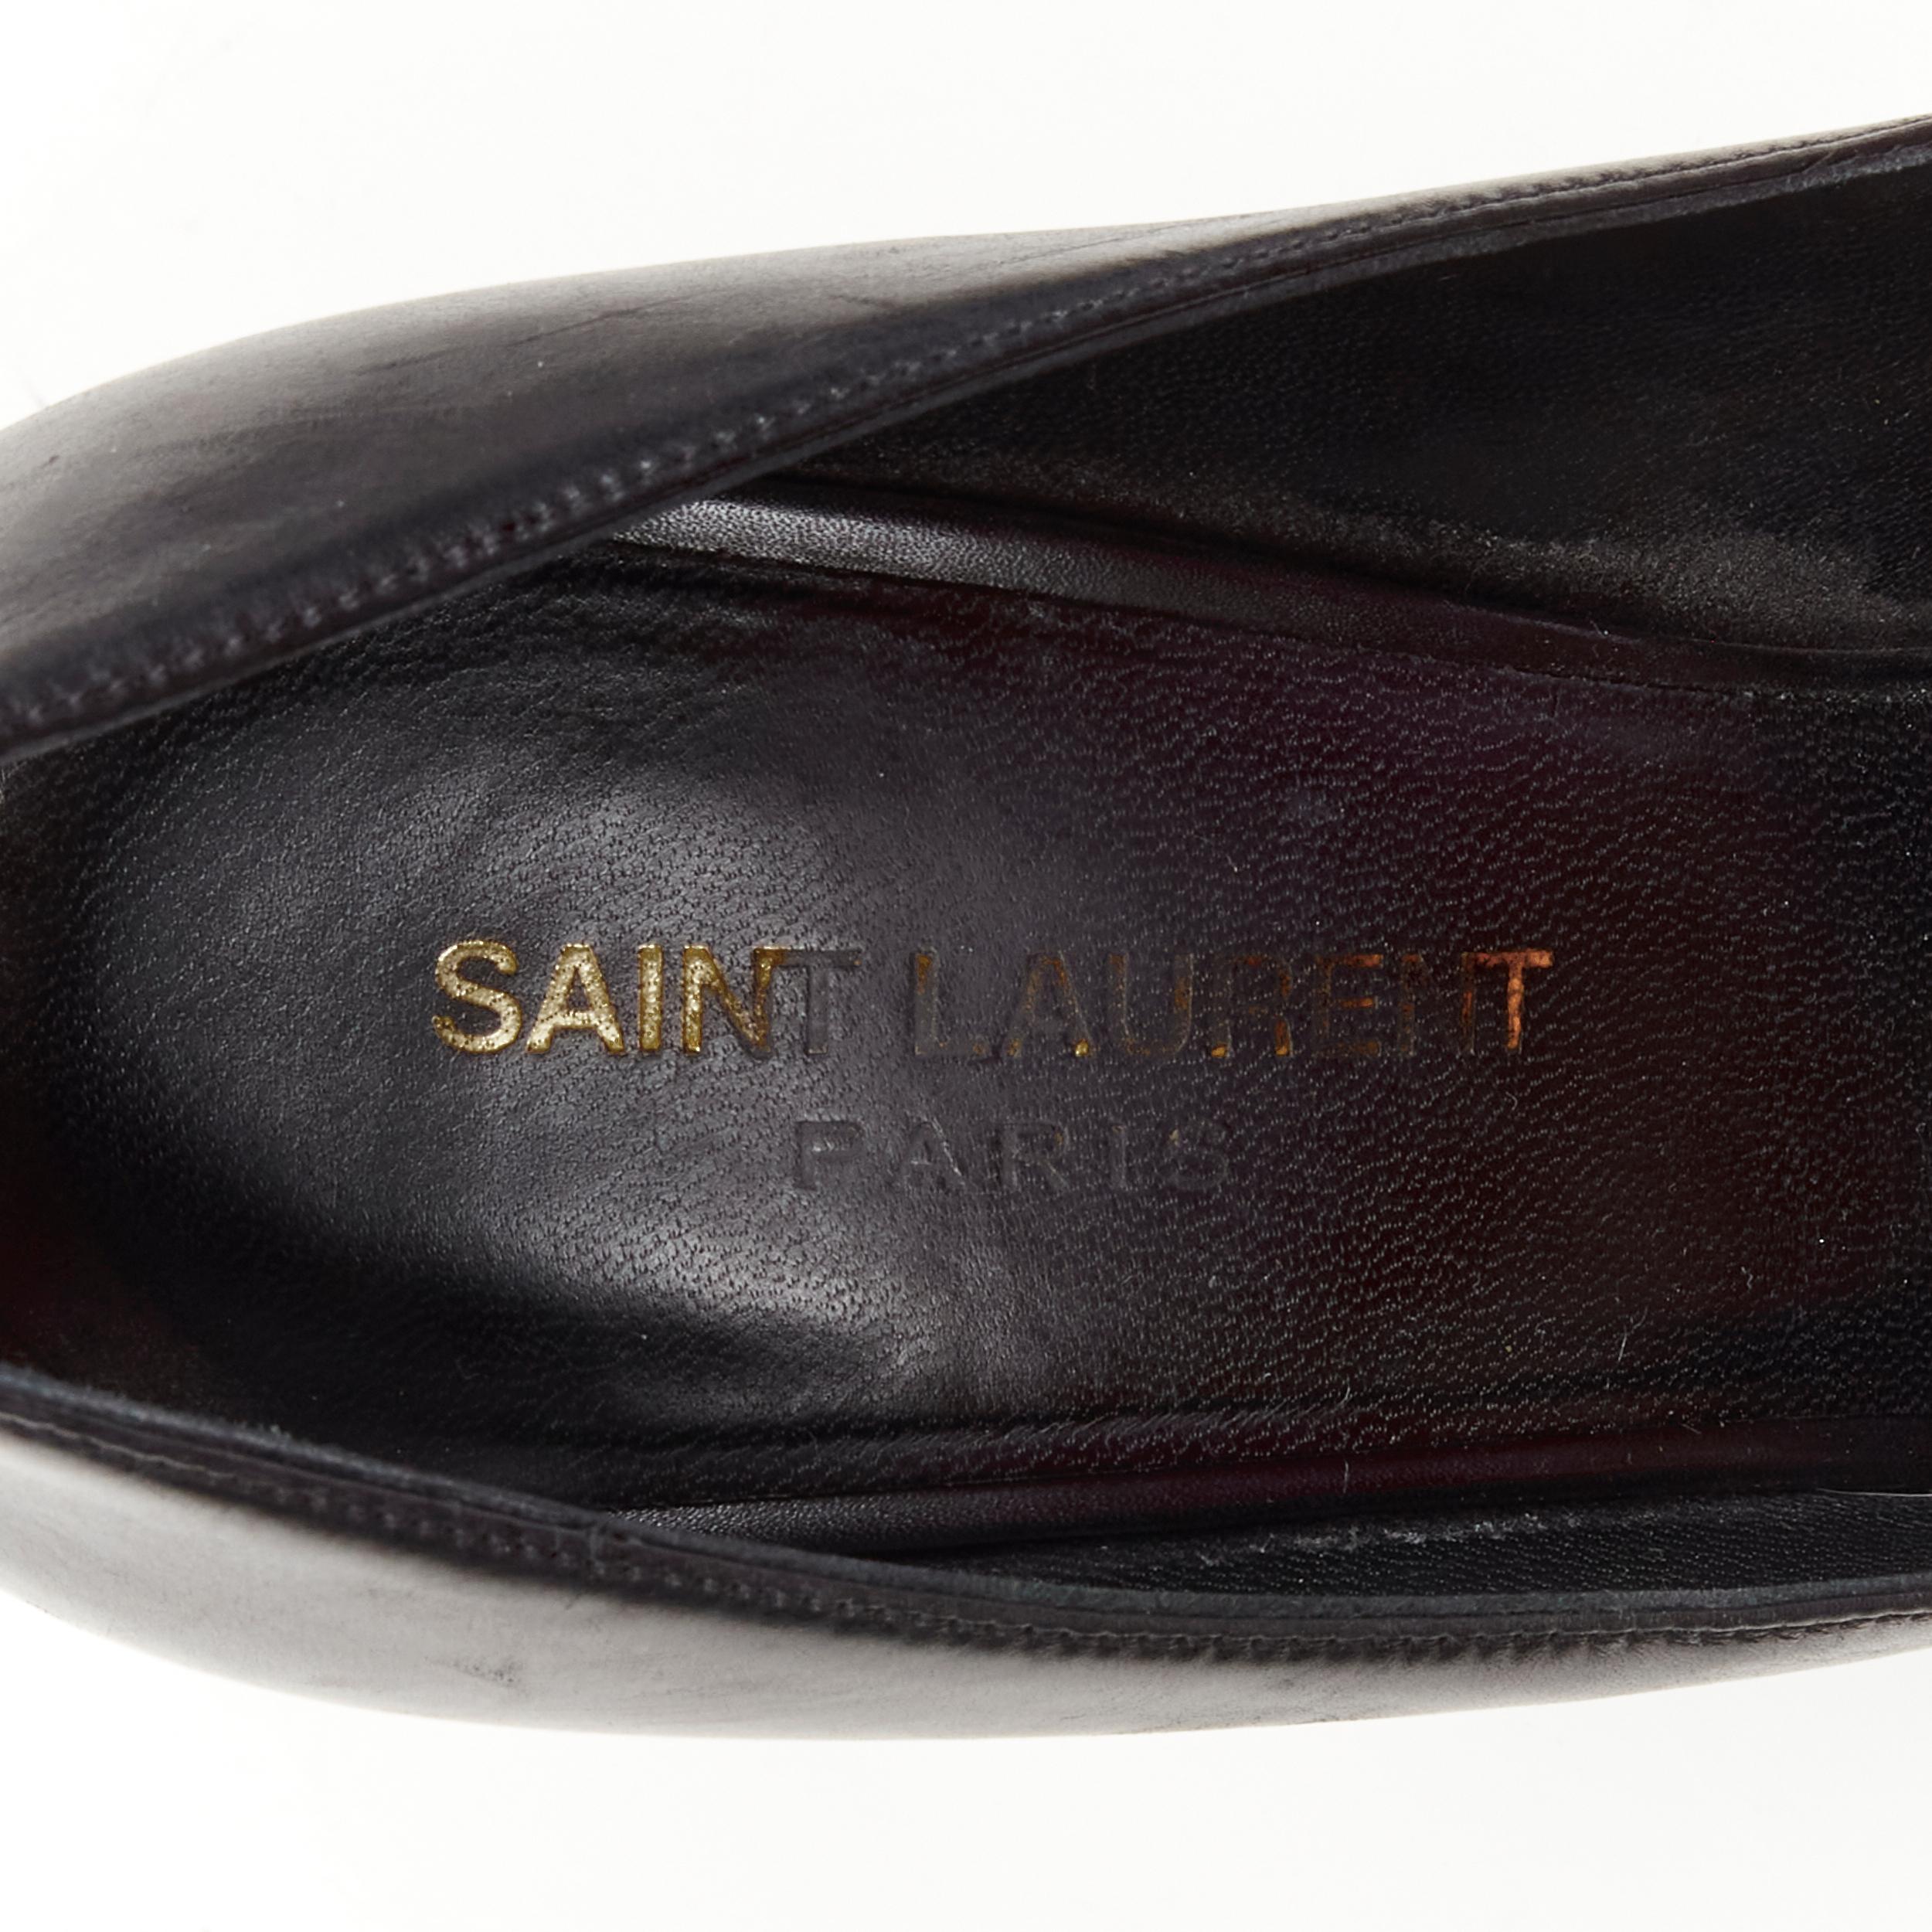 SAINT LAURENT Janis black leather gold icro stud toe cap high heel pump EU38 5